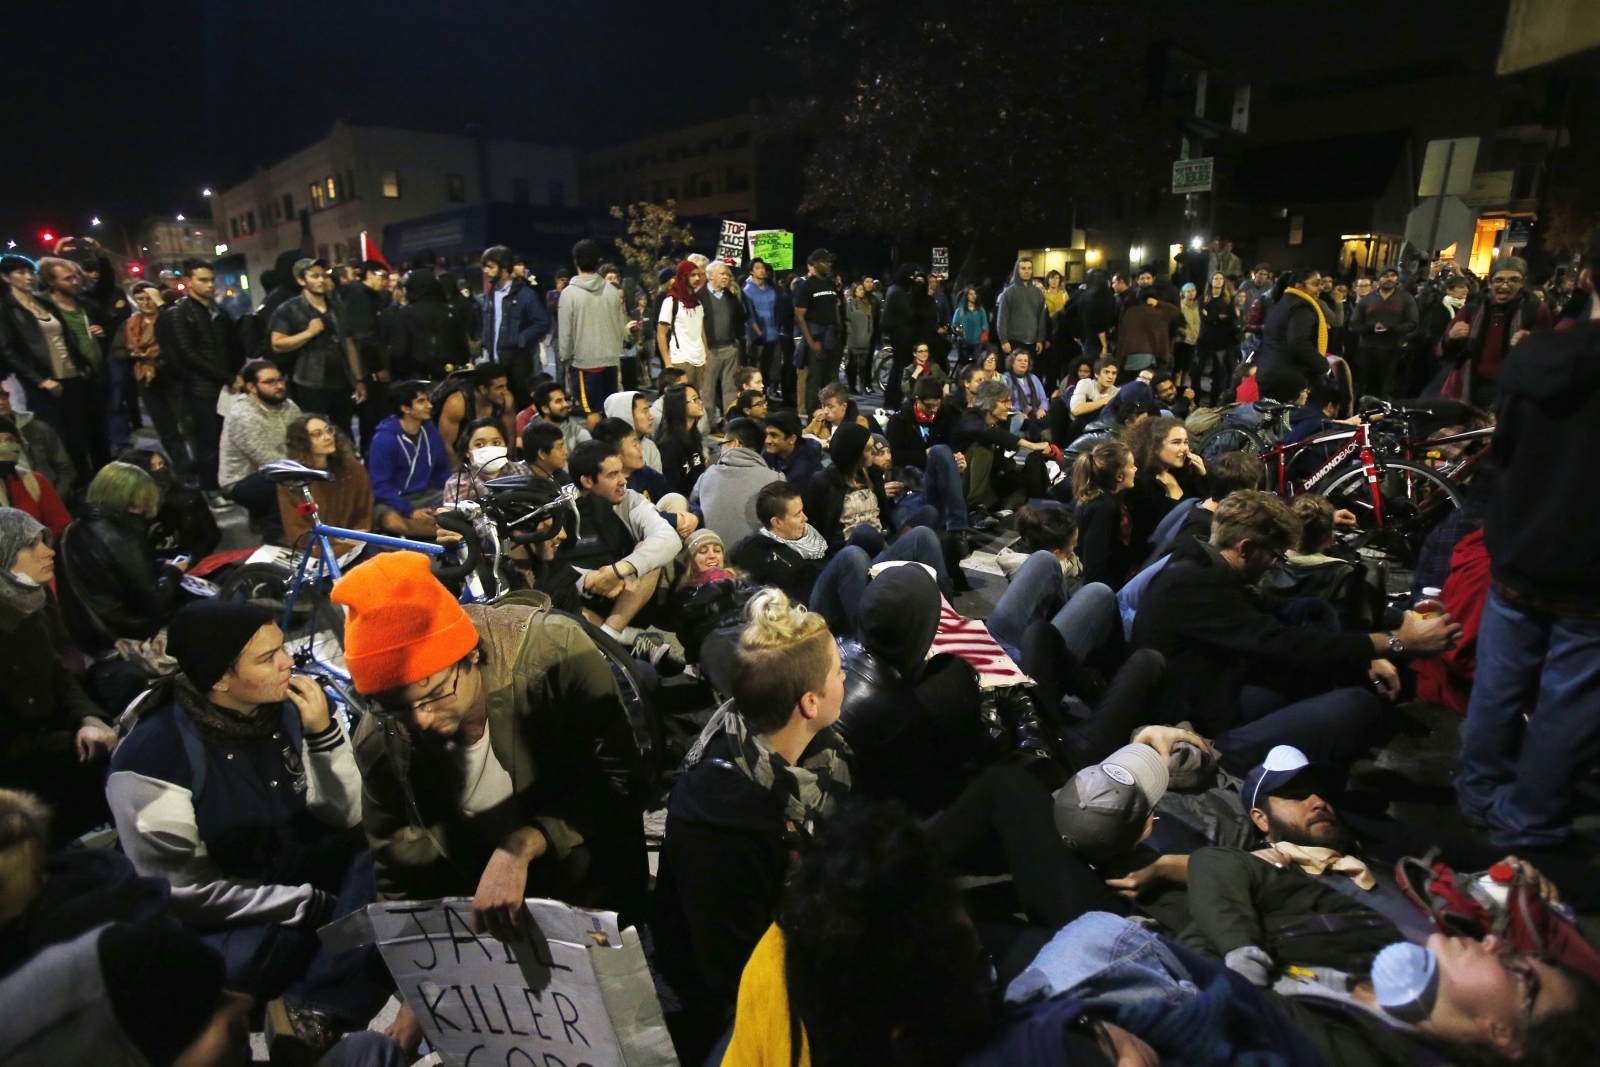 Eric Garner Death: Berkeley Protesters clash with Police